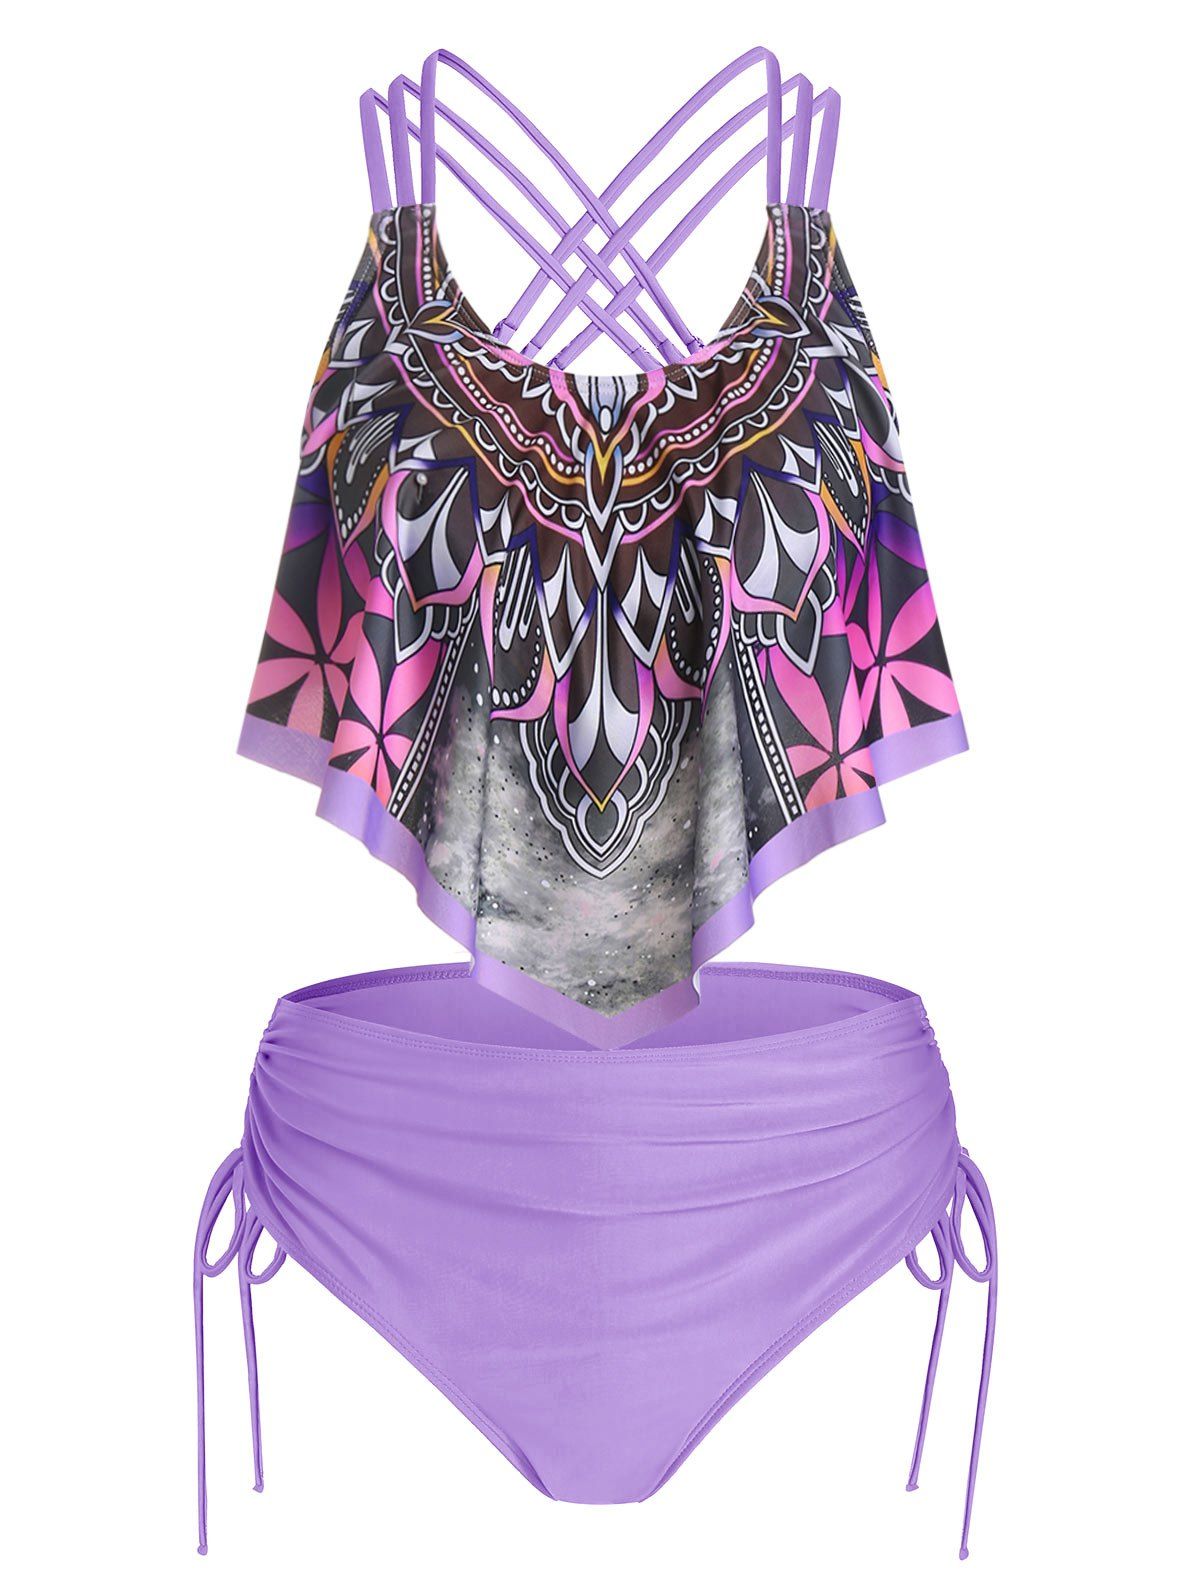 Bohemian Tankini Swimsuit Floral Plaid Print Swimwear Cinched Crisscross Tummy Control Bathing Suit - LIGHT PURPLE M